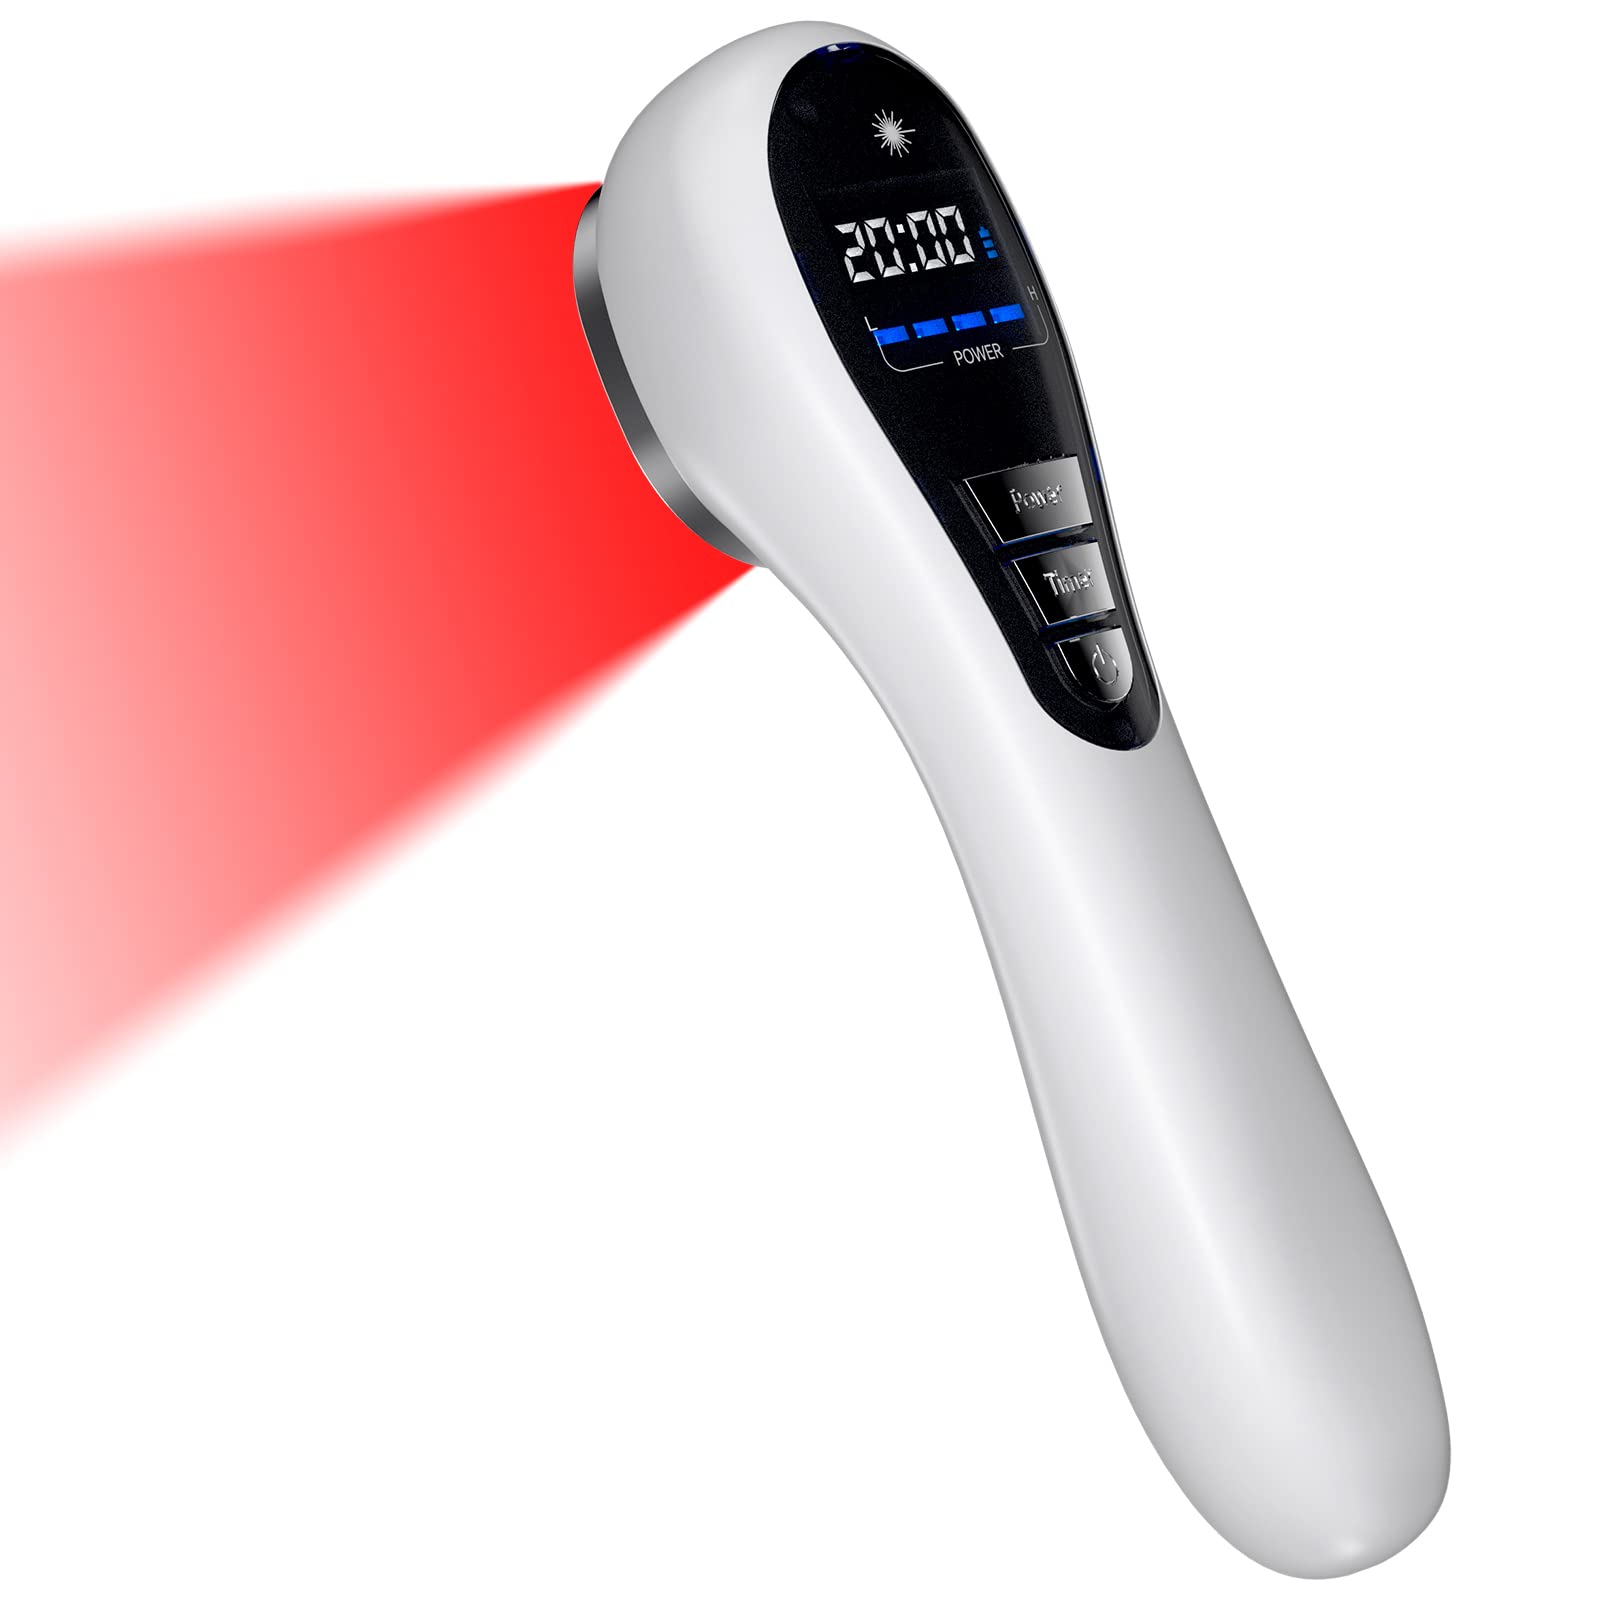 A futuristic red light therapy device